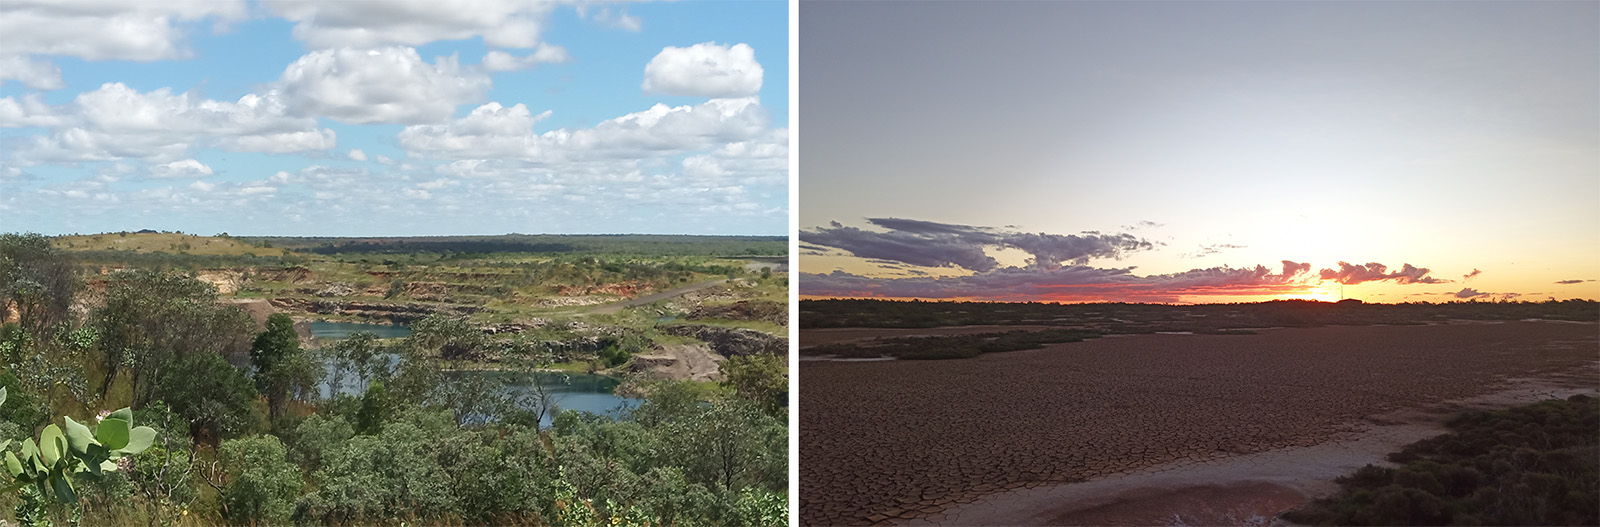 Ellendale diamond mine site, Western Australia. Left- overview of the mine; right - Lanscape at sunset